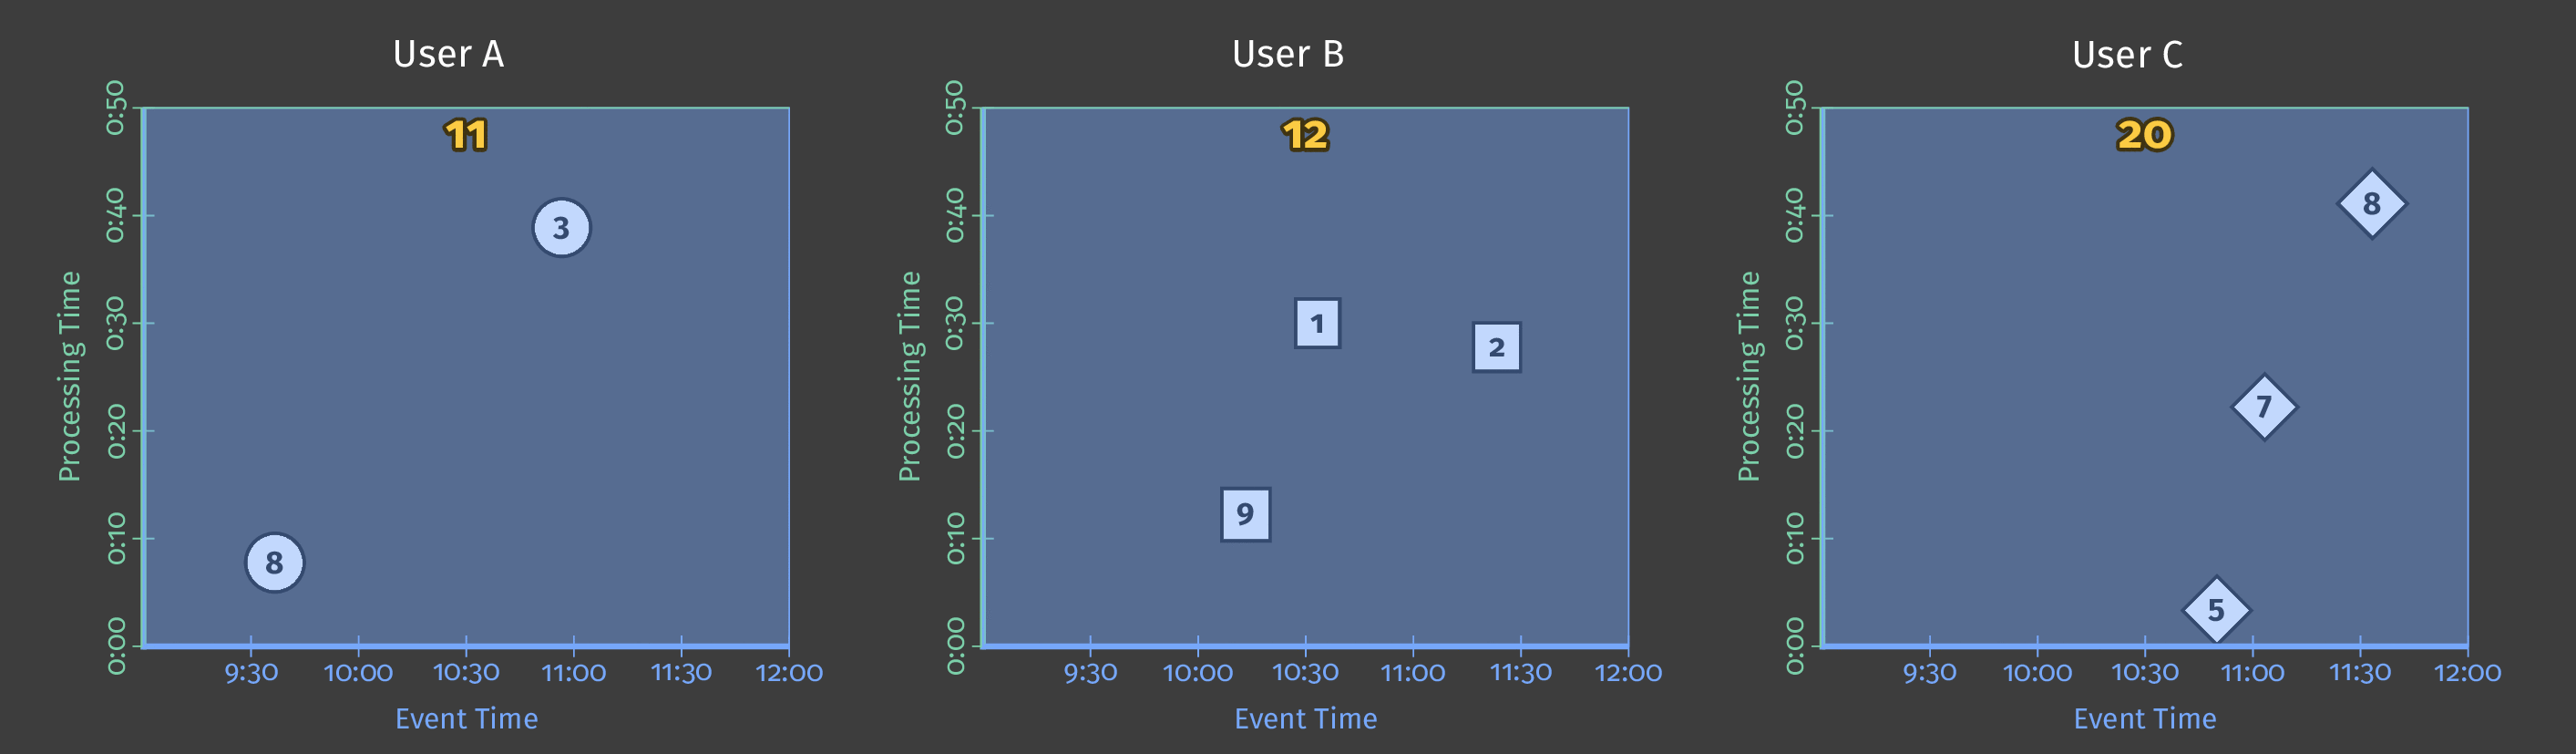 Summing users' scores